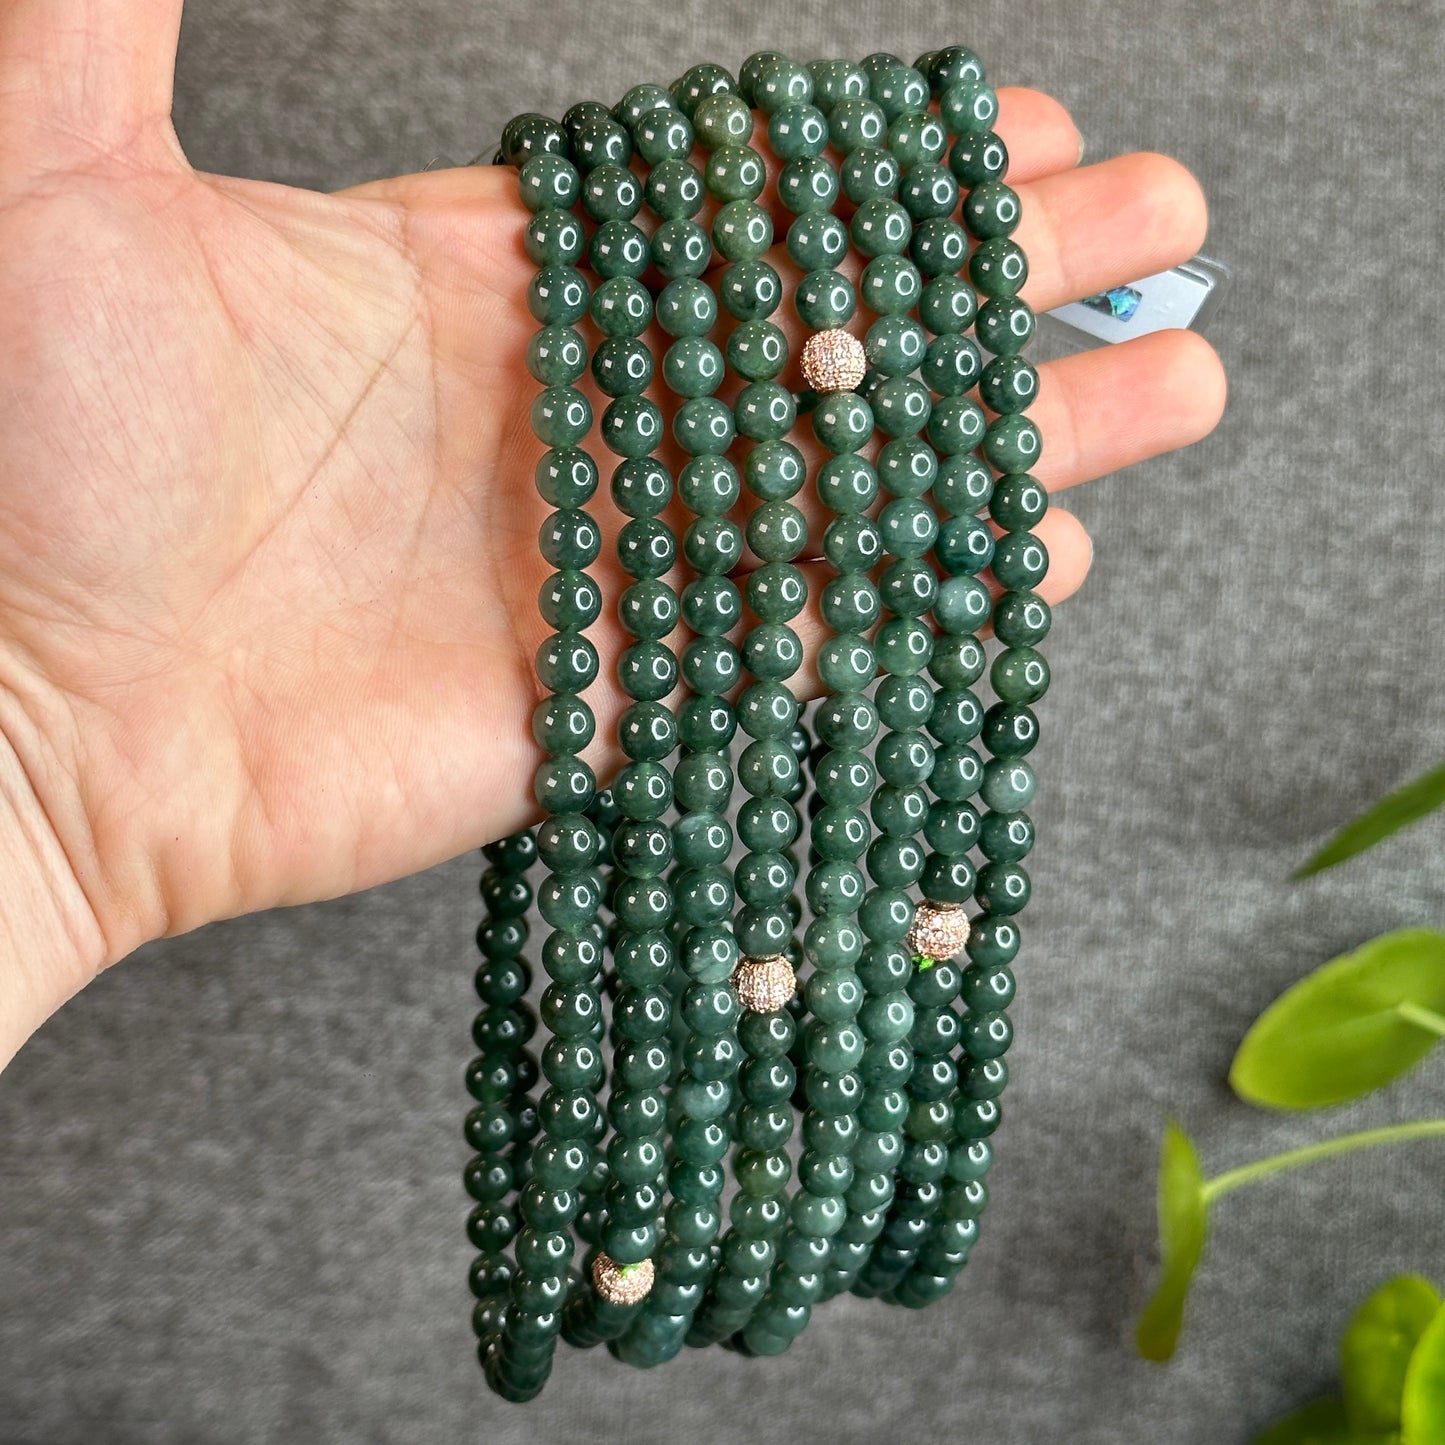 Water Green Natural Jadeite Jade Triple Wrap Bracelet Size 7.6 mm - 108 beads